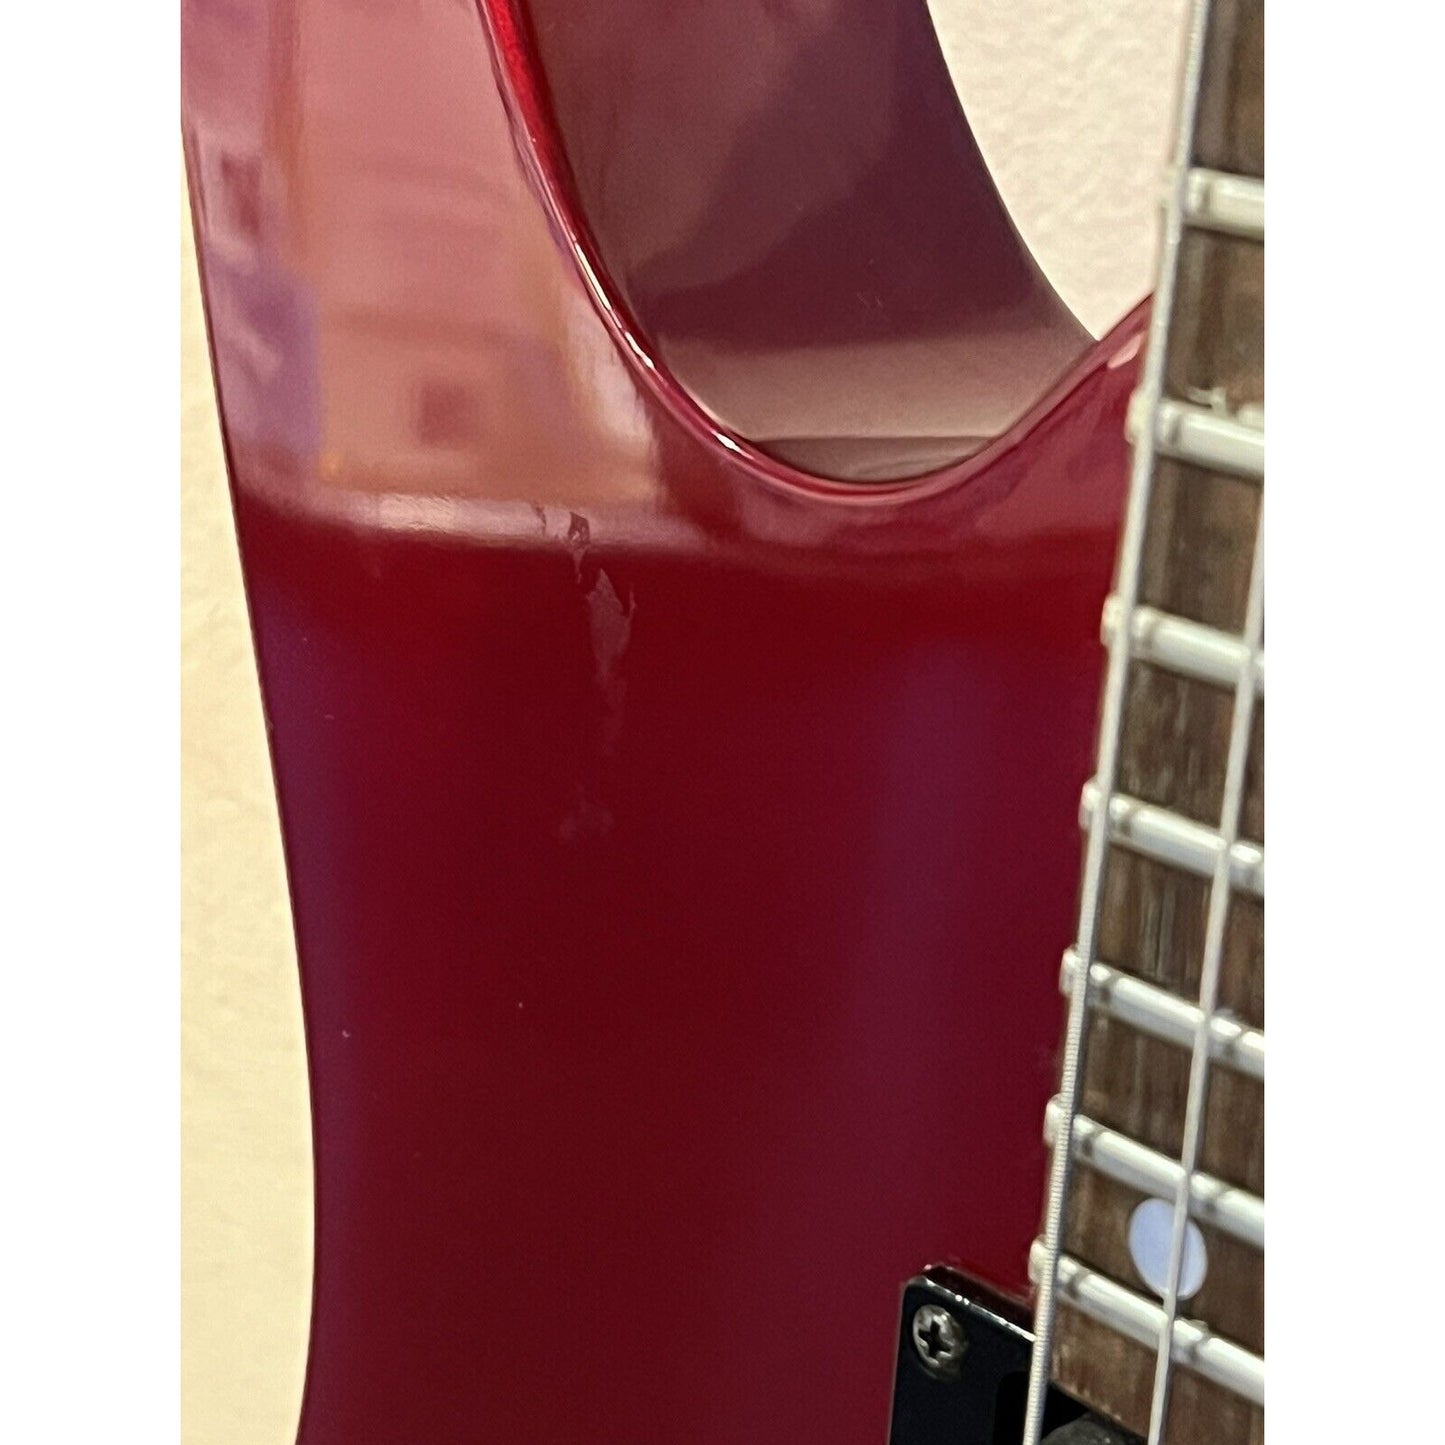 RARE 1994 Ibanez RG470 Crimson Metallic Red Electric Guitar - Made in Korea